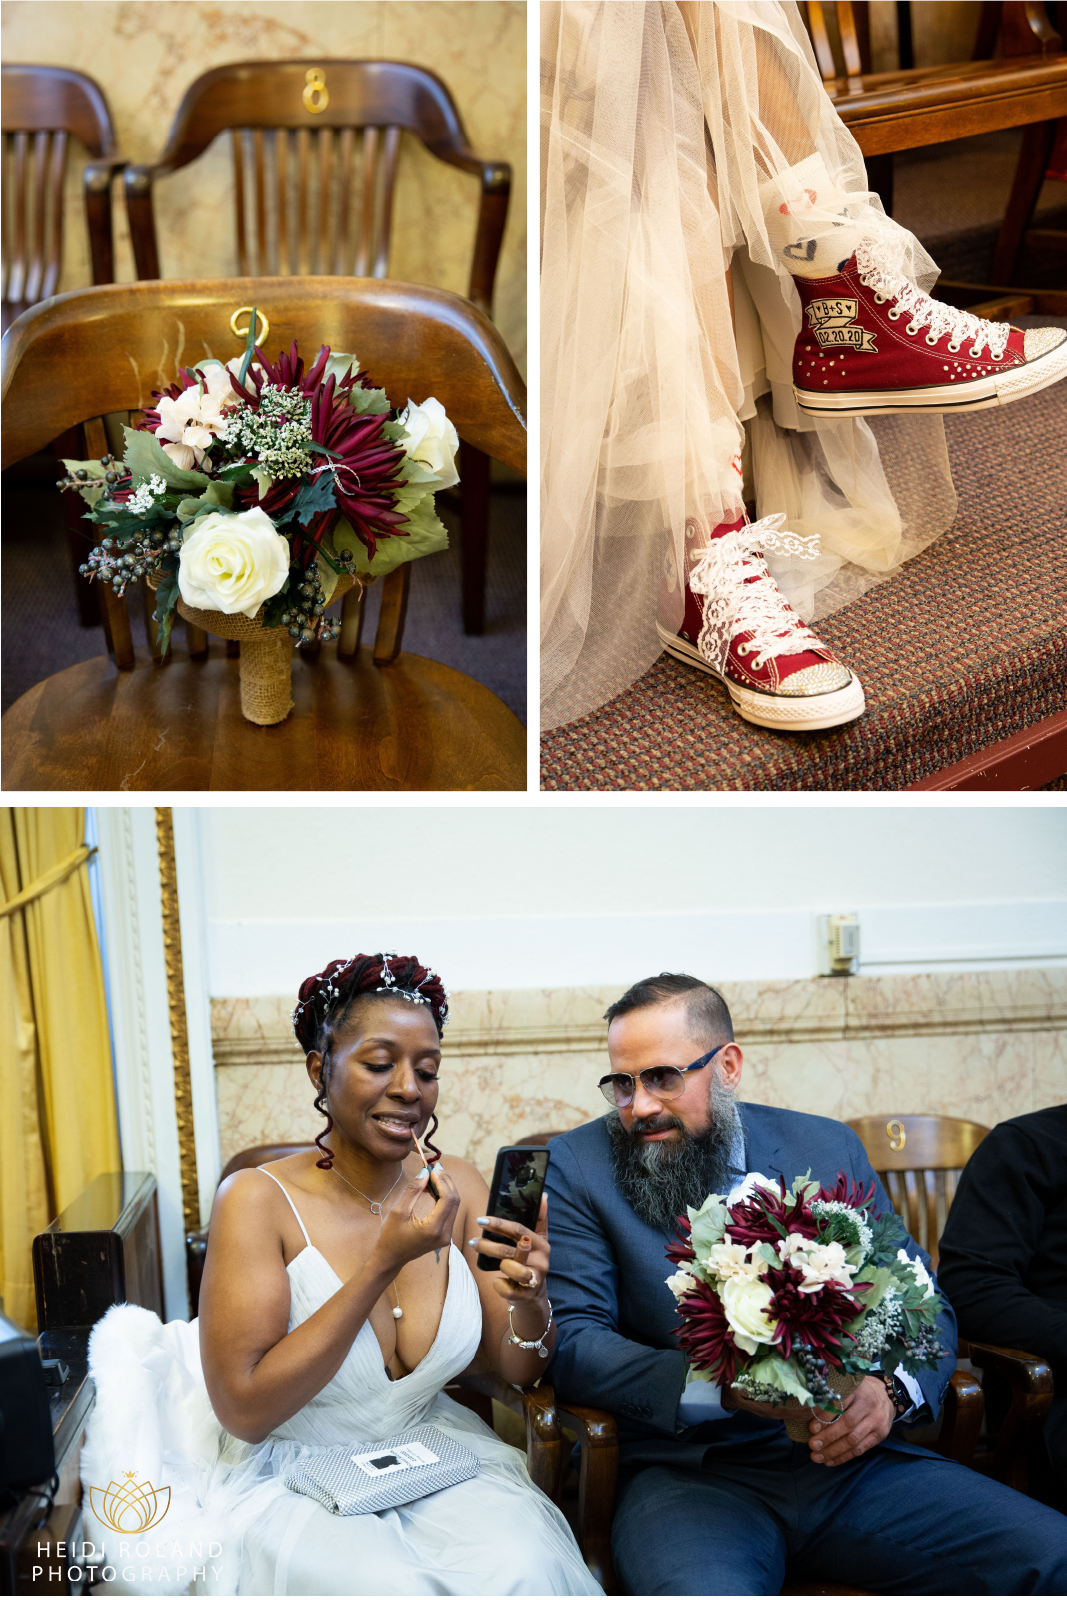 Chuck Taylor custom bridal shoes